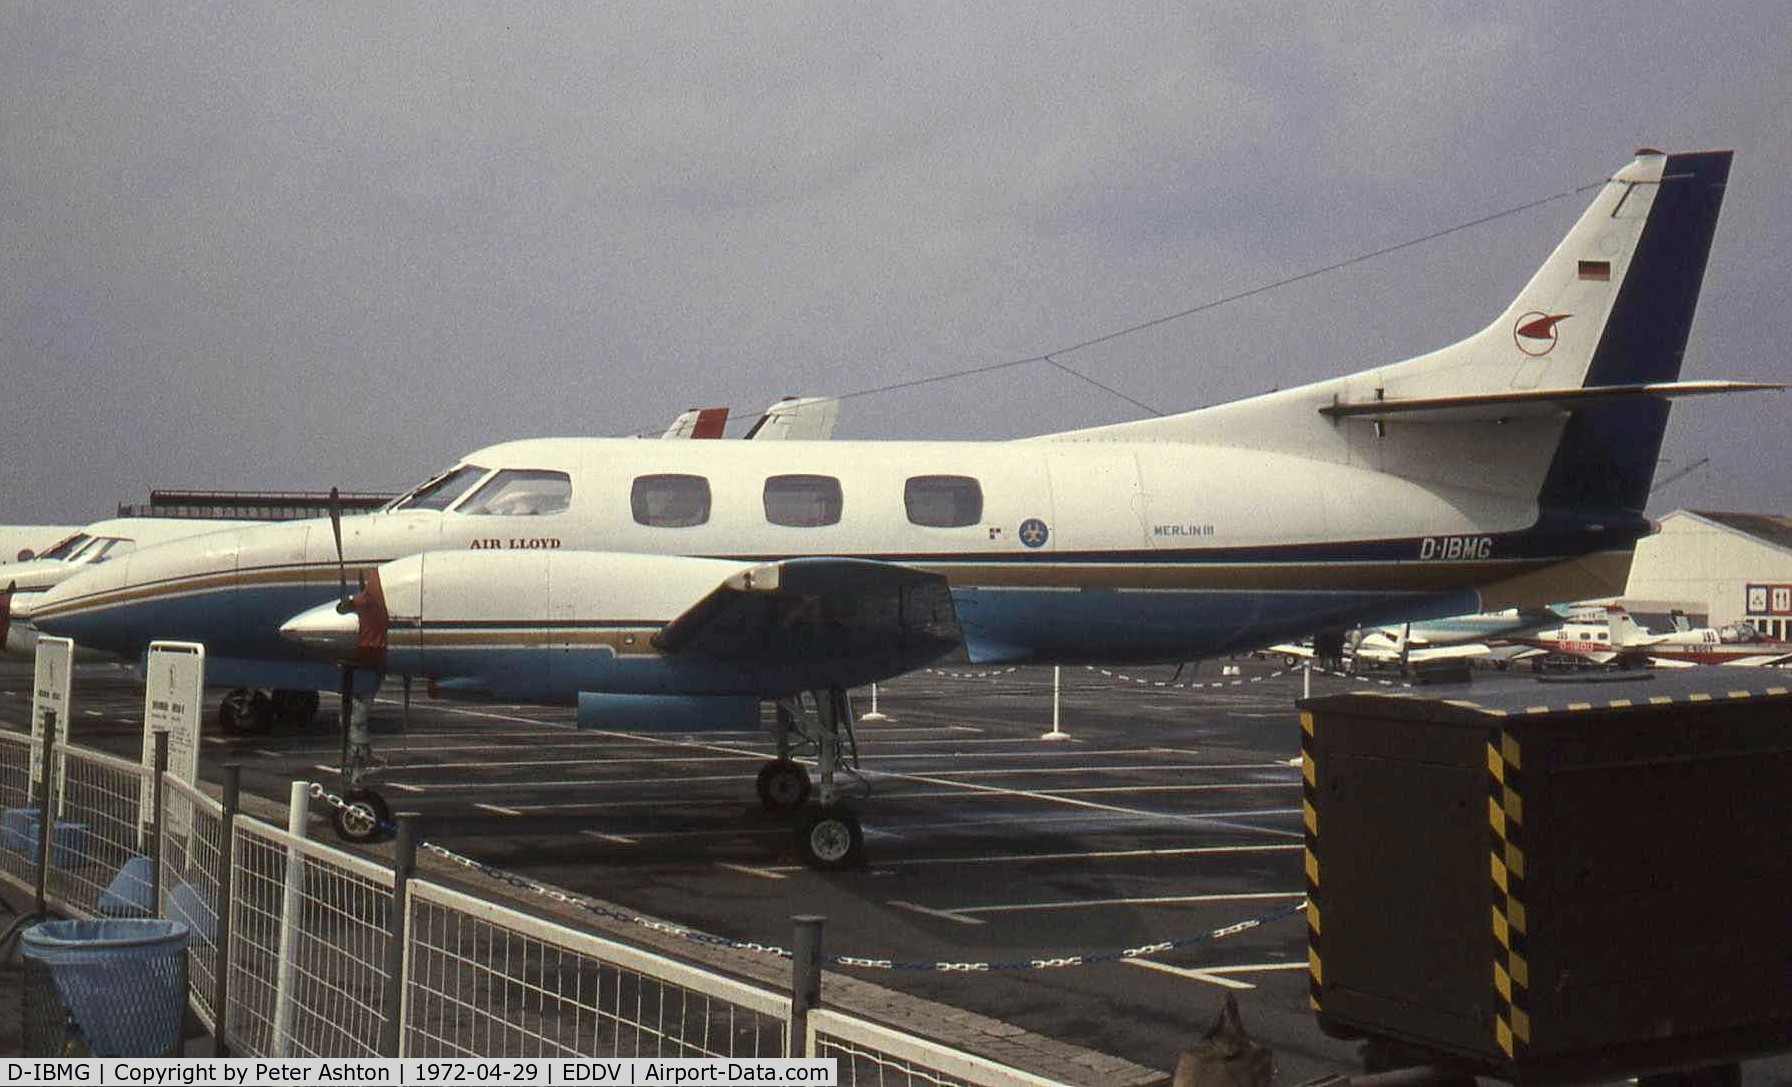 D-IBMG, 1971 Swearingen SA-226T Merlin III C/N T-206, Air Lloyd